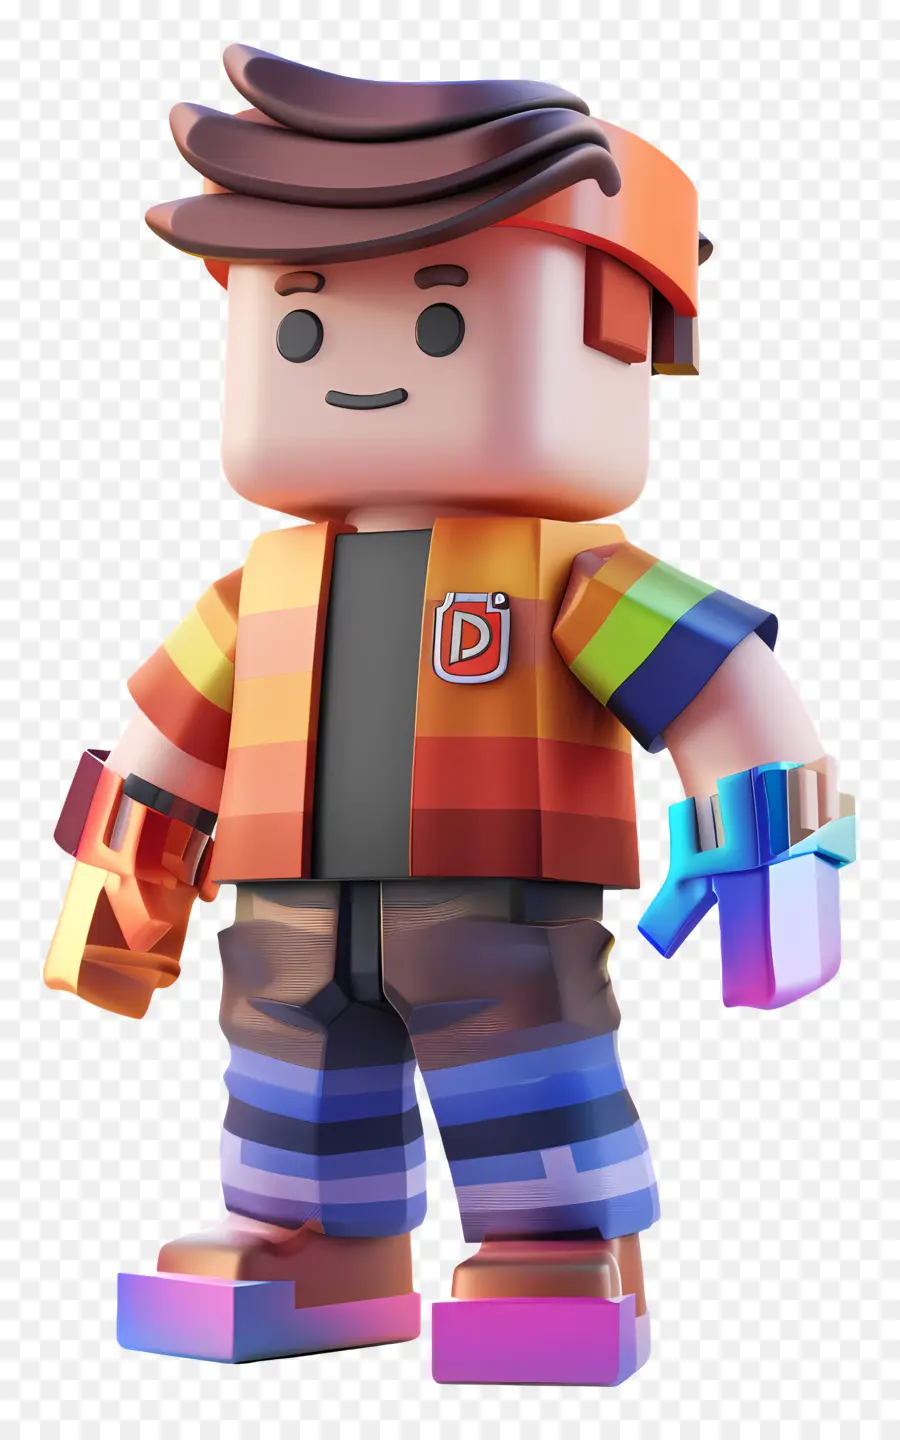 roblox boy lego mini figure colorful armor